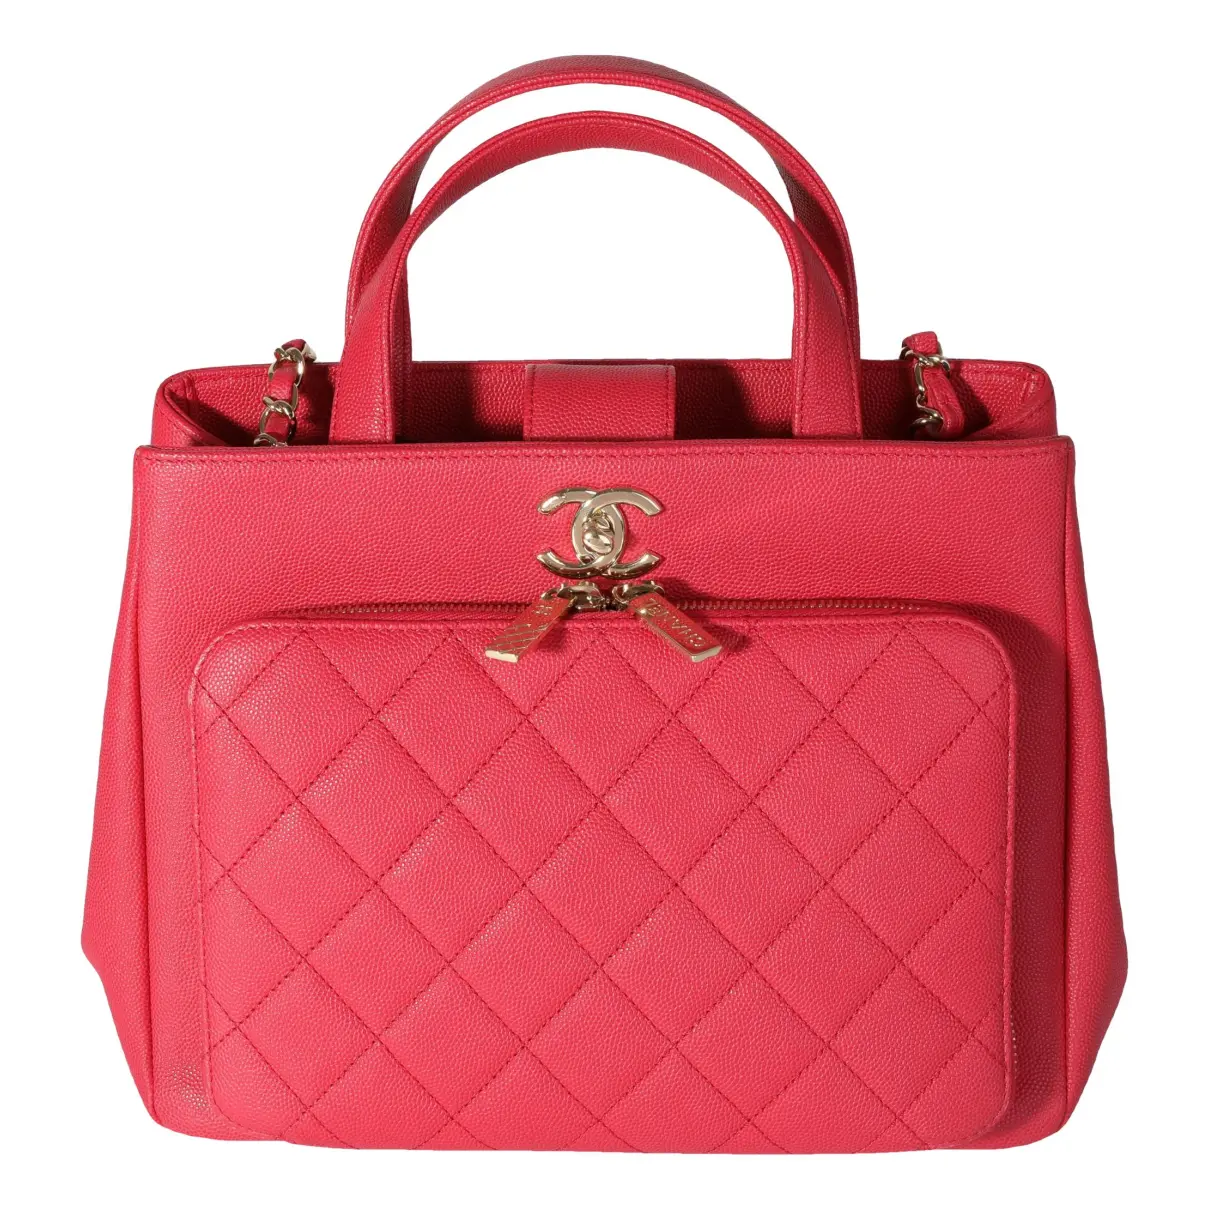 Business Affinity leather handbag